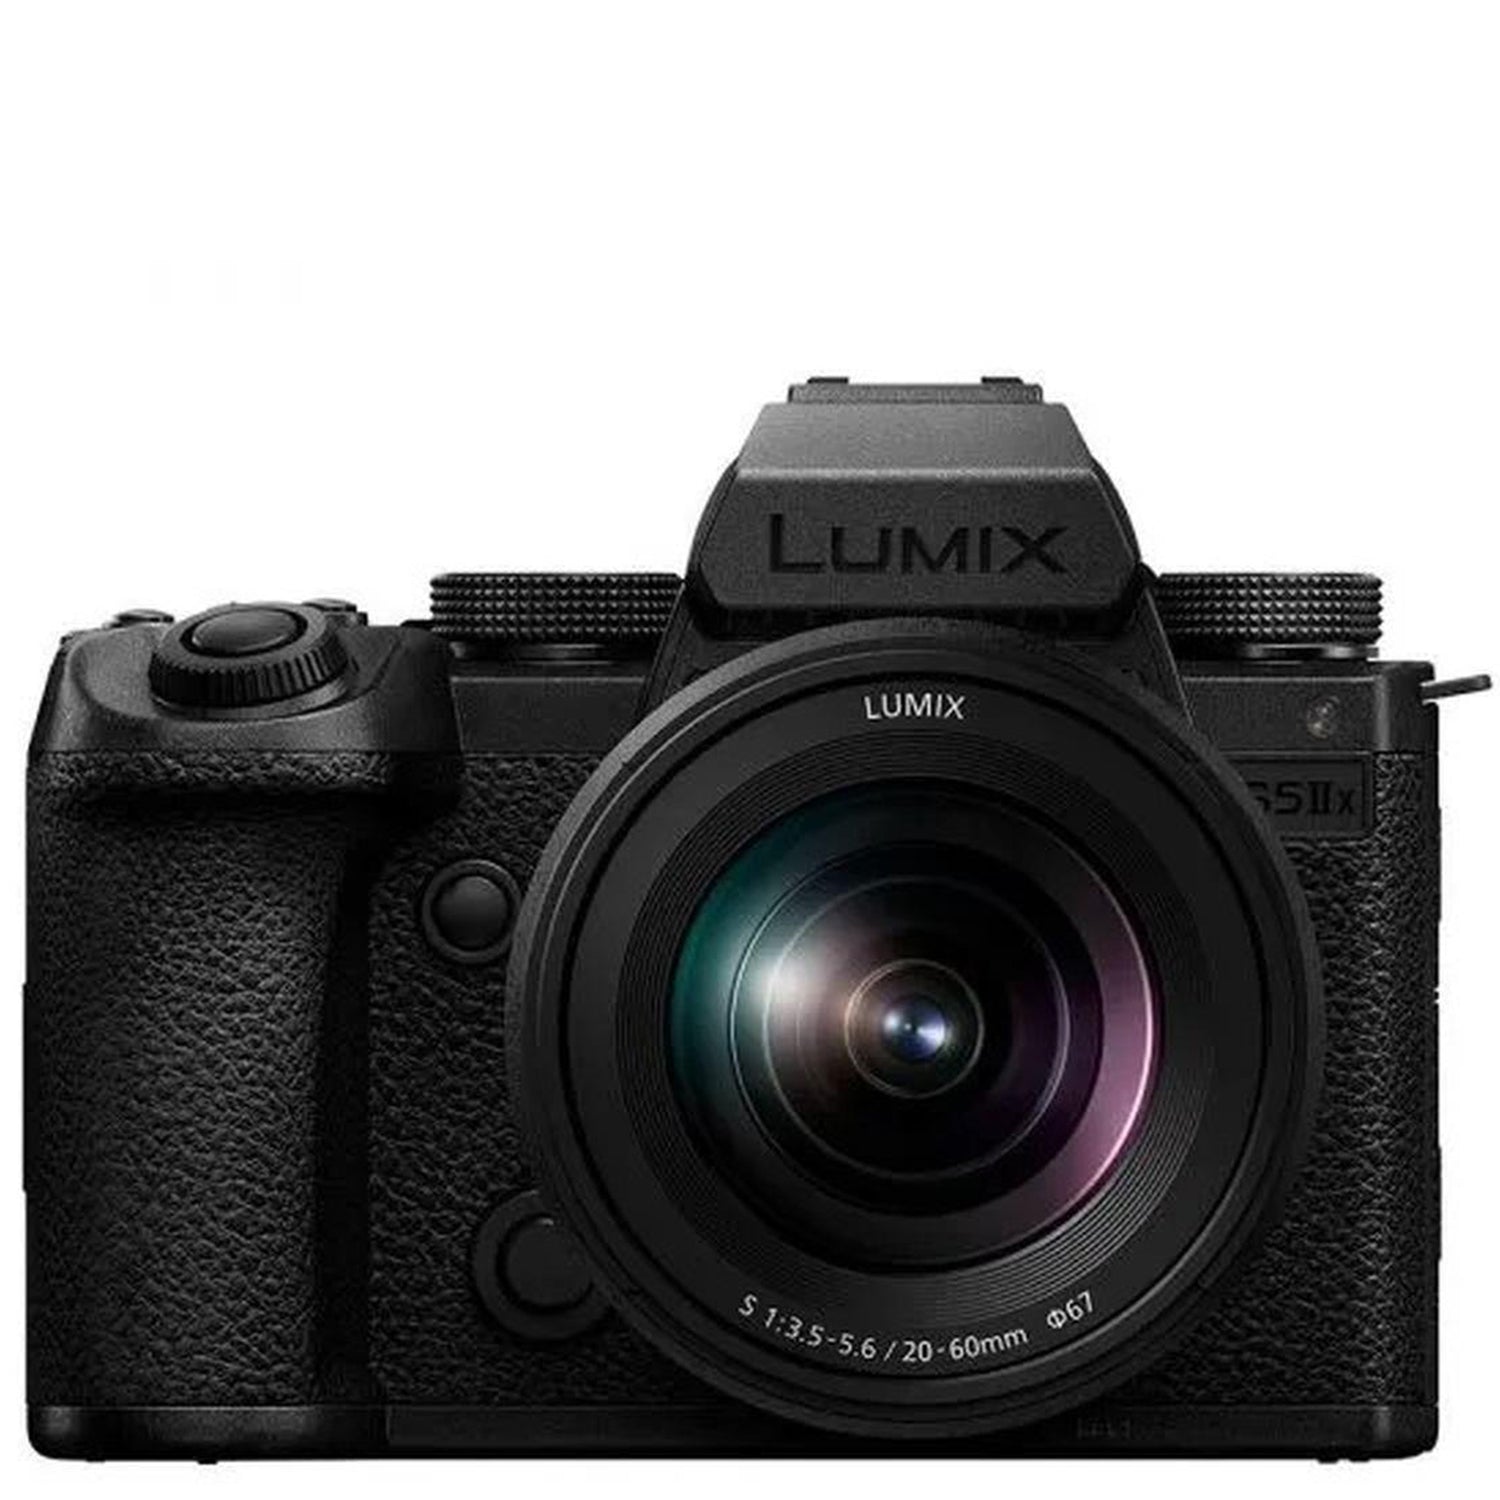 Panasonic Lumix S5 MIIX + 20-60mm - Garanzia Fowa 4 anni - Cine Sud è da 47 anni sul mercato! 7S5X2K -lumacb